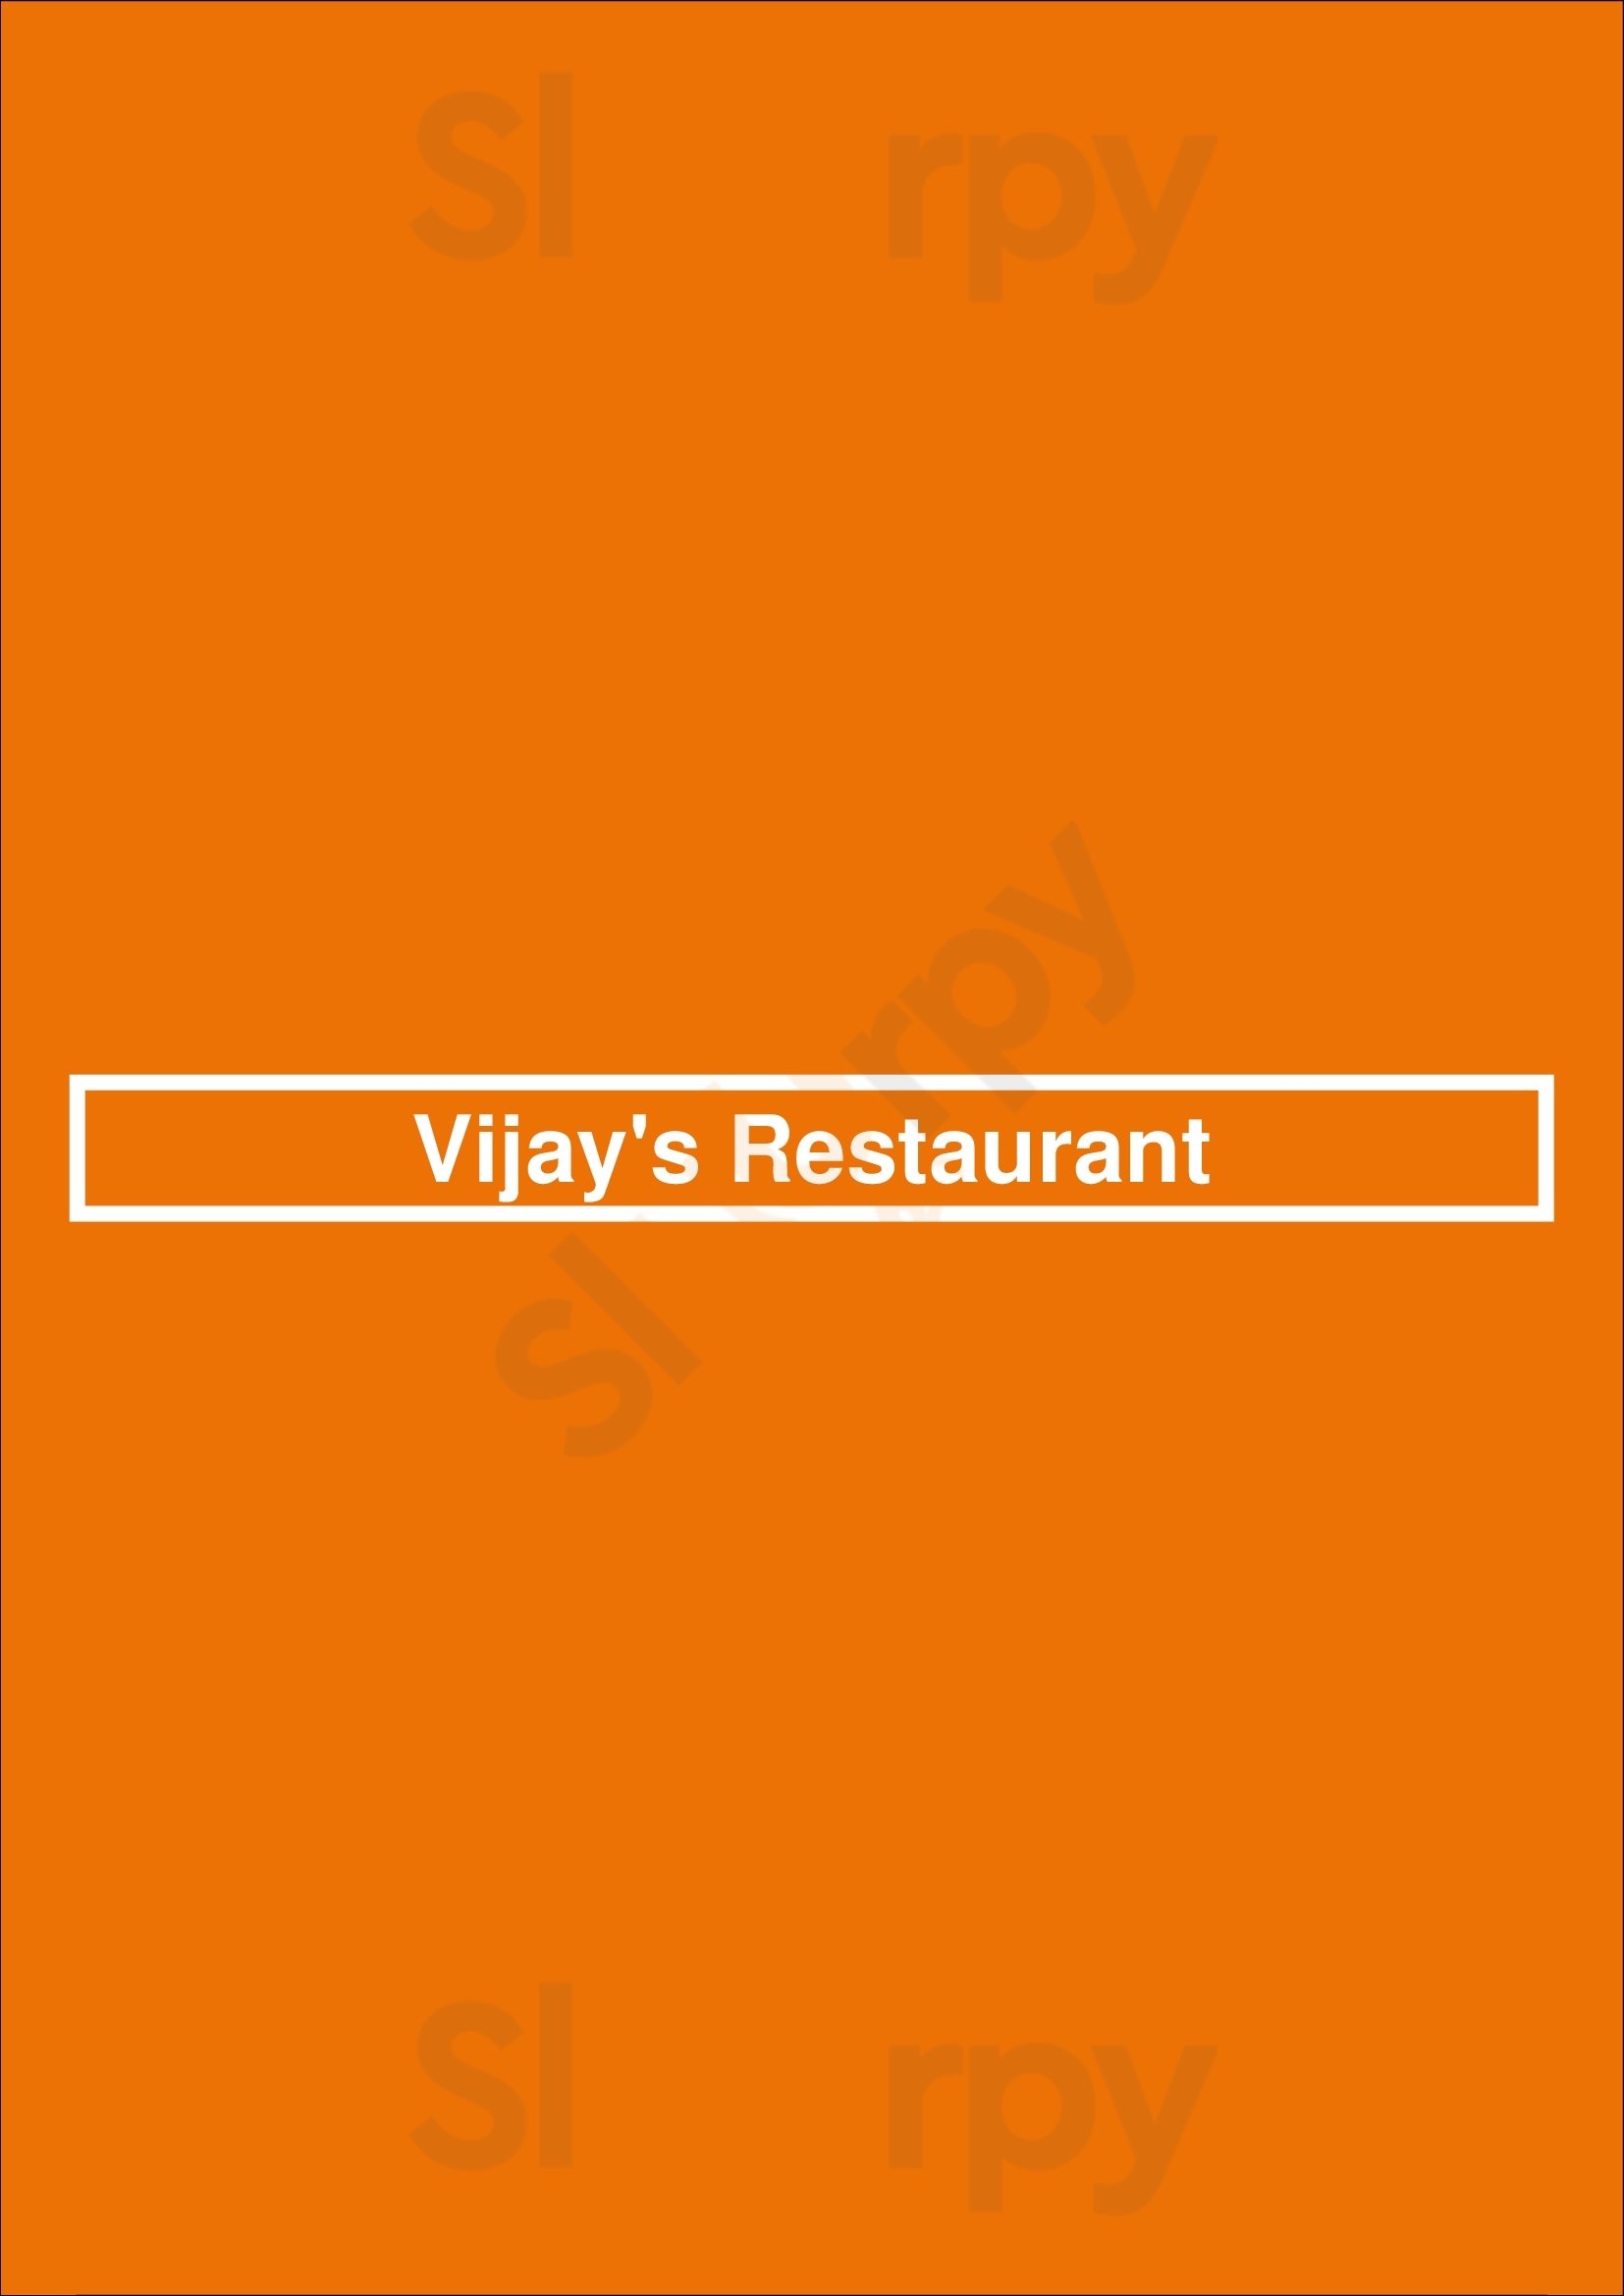 Vijay's Restaurant Kitchener Menu - 1